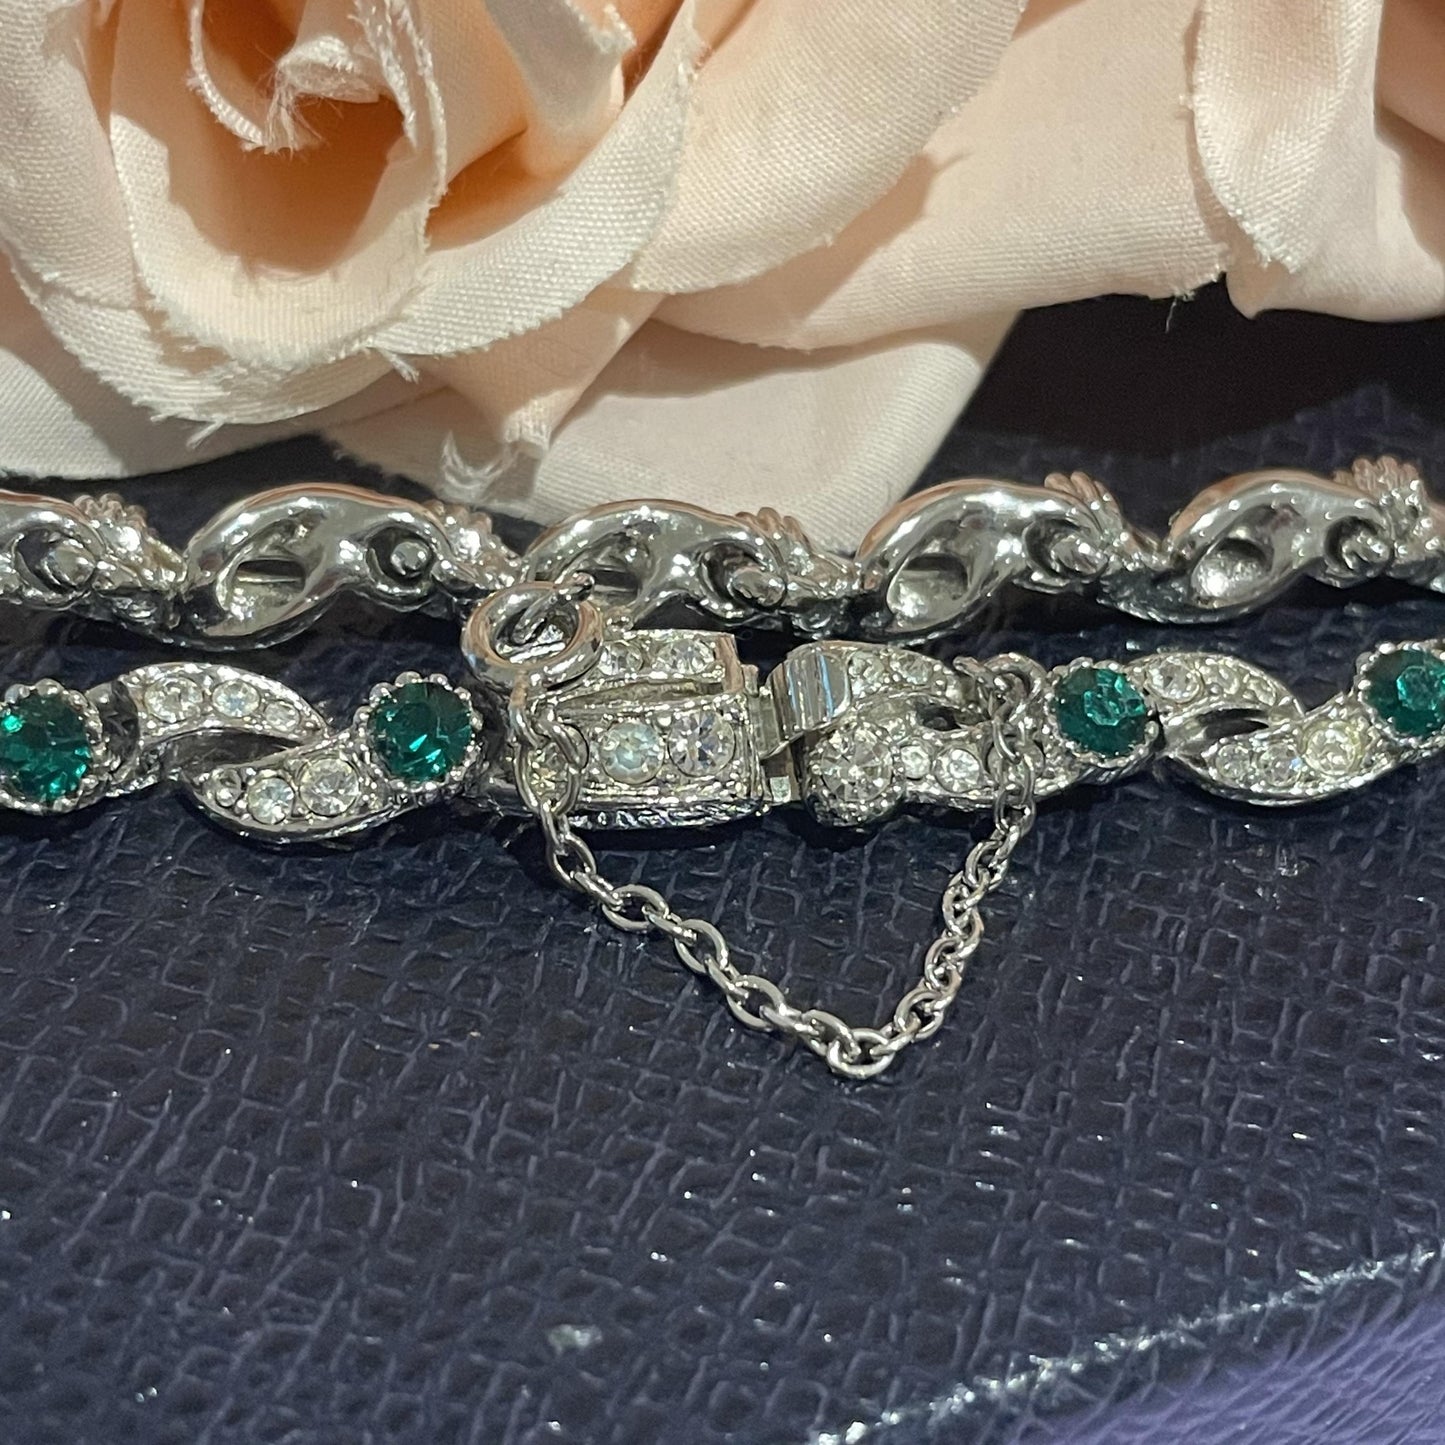 1940s Rhodium Plated Sparkly Emerald Green Diamanté Bracelet